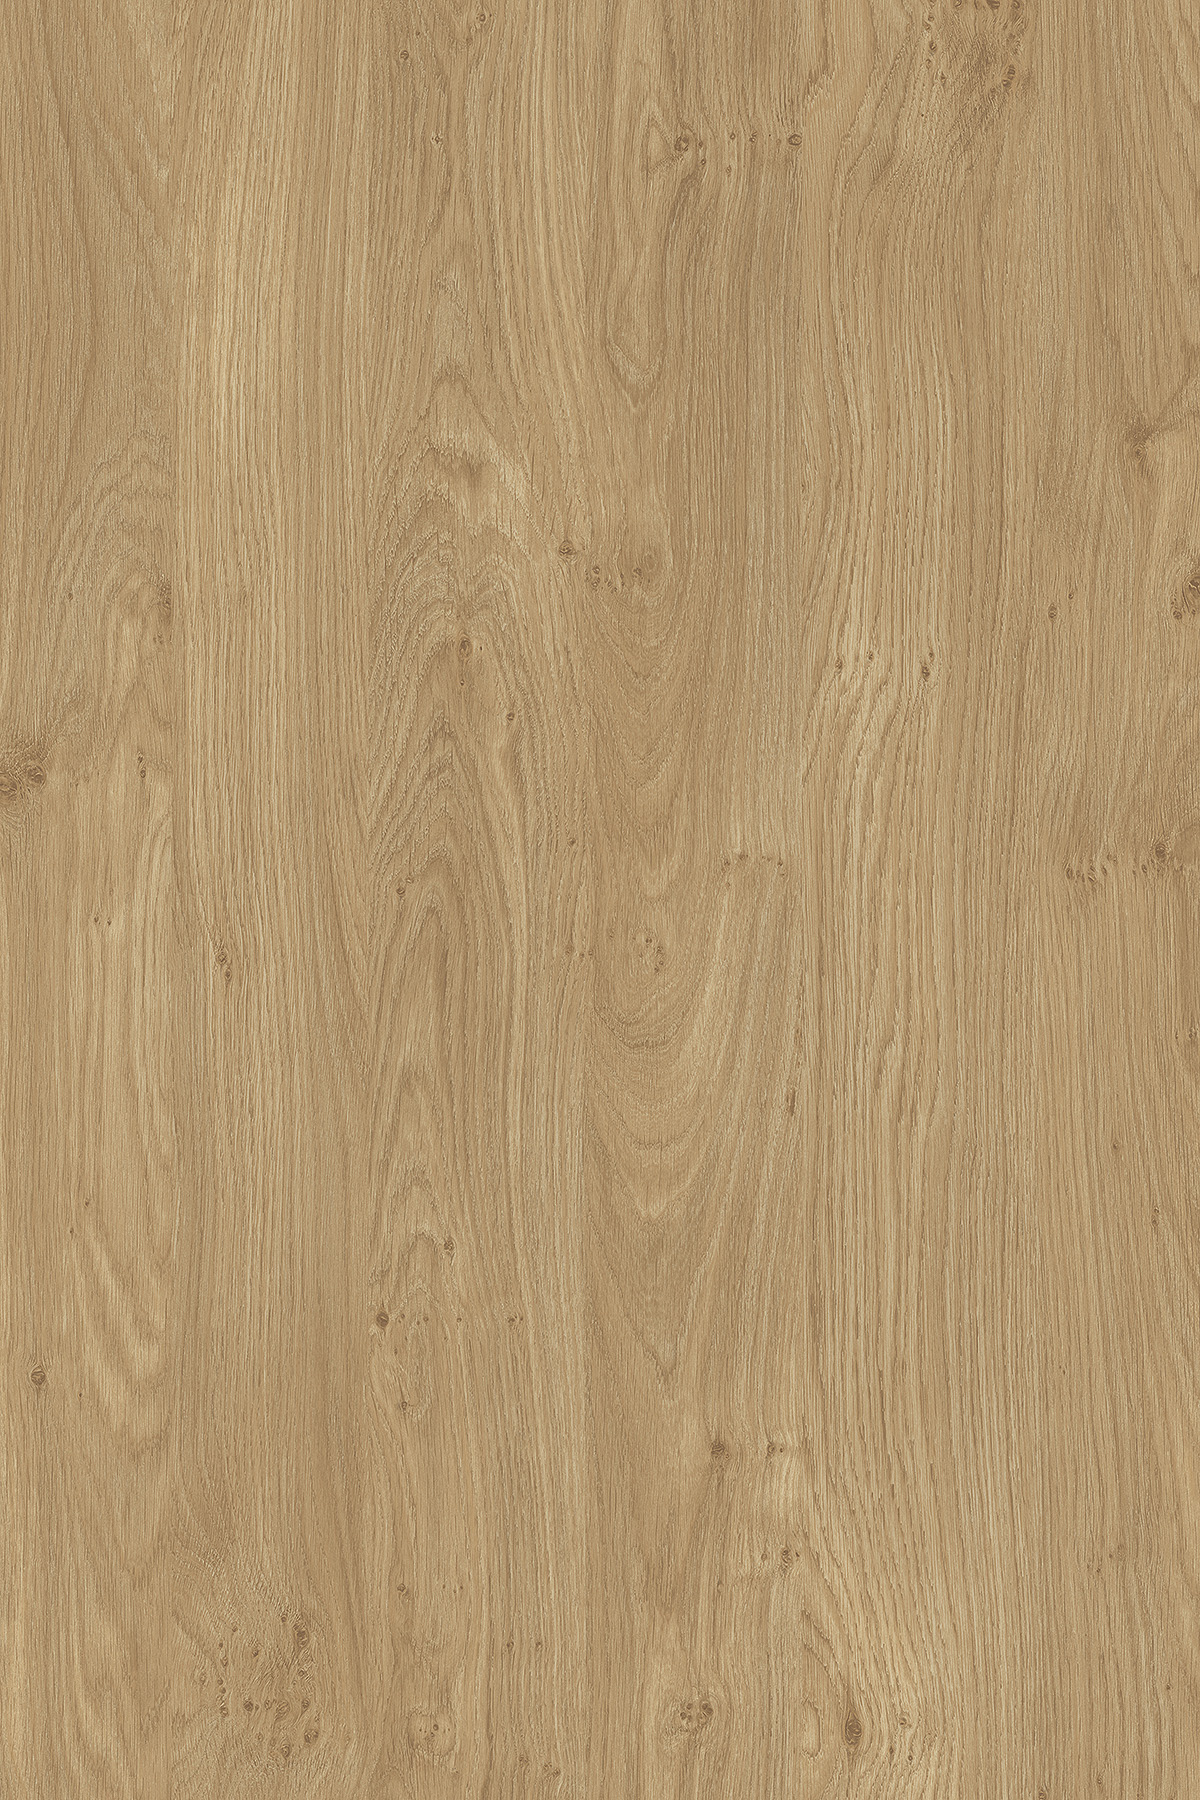 Decors - Kronospan - Leading manufacturer of wood-based panels